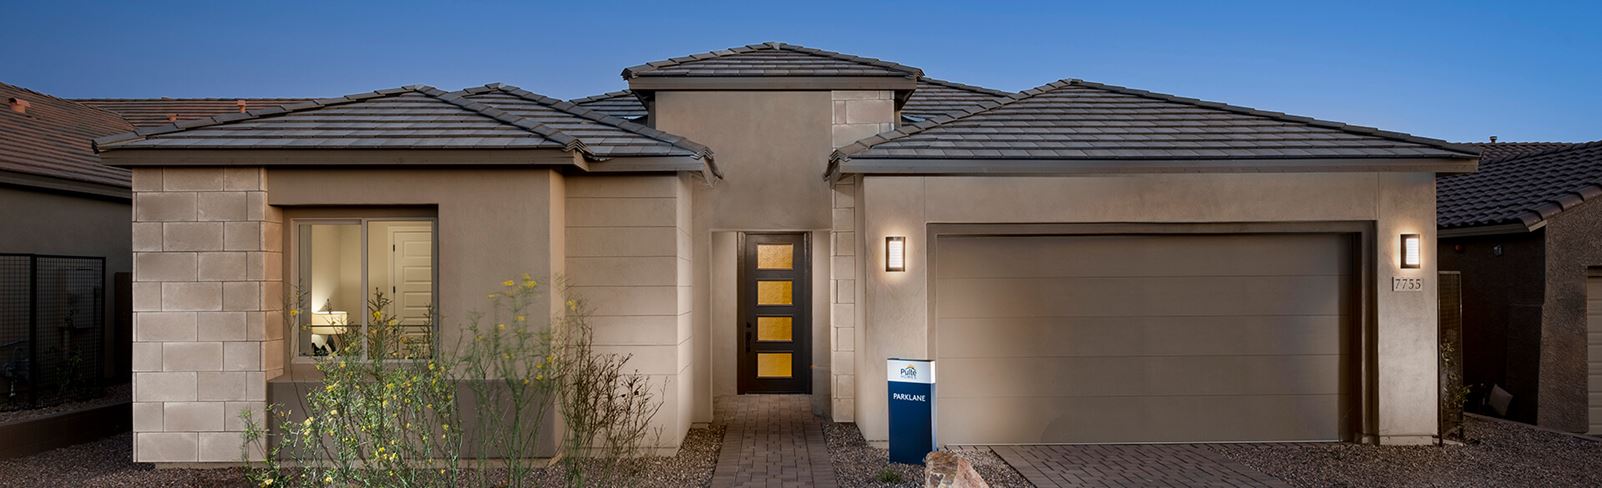 Pulte Homes homebuilder in Blossom Rock Mesa, Arizona